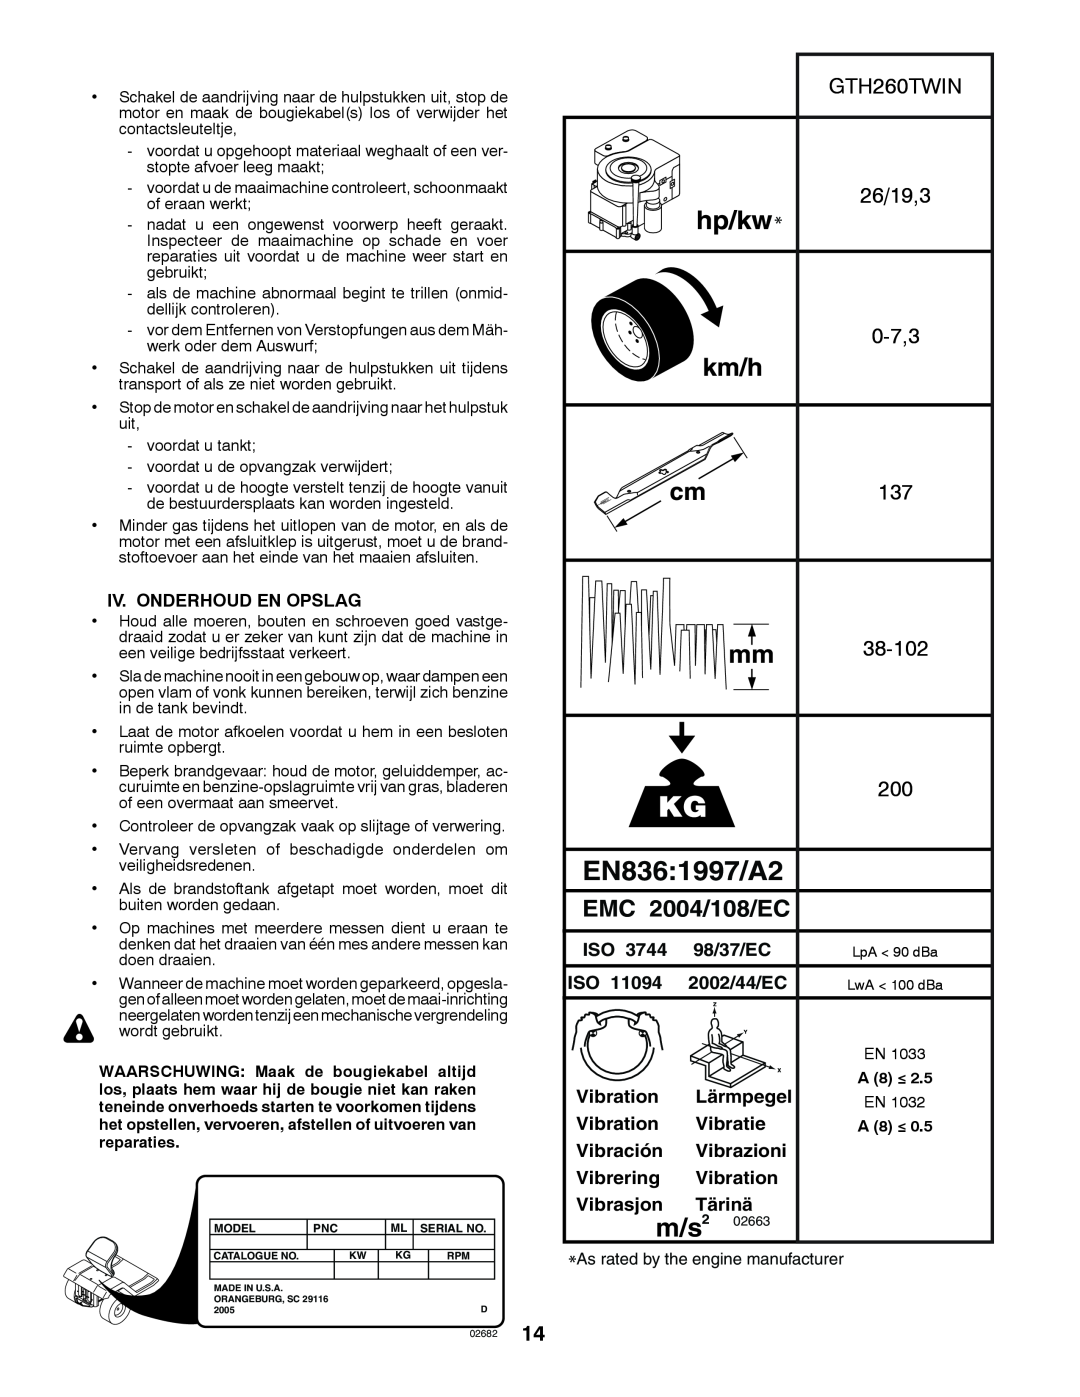 Husqvarna GTH260TWIN instruction manual EN836:1997/A2, m/s2, EMC 2004/108/EC 